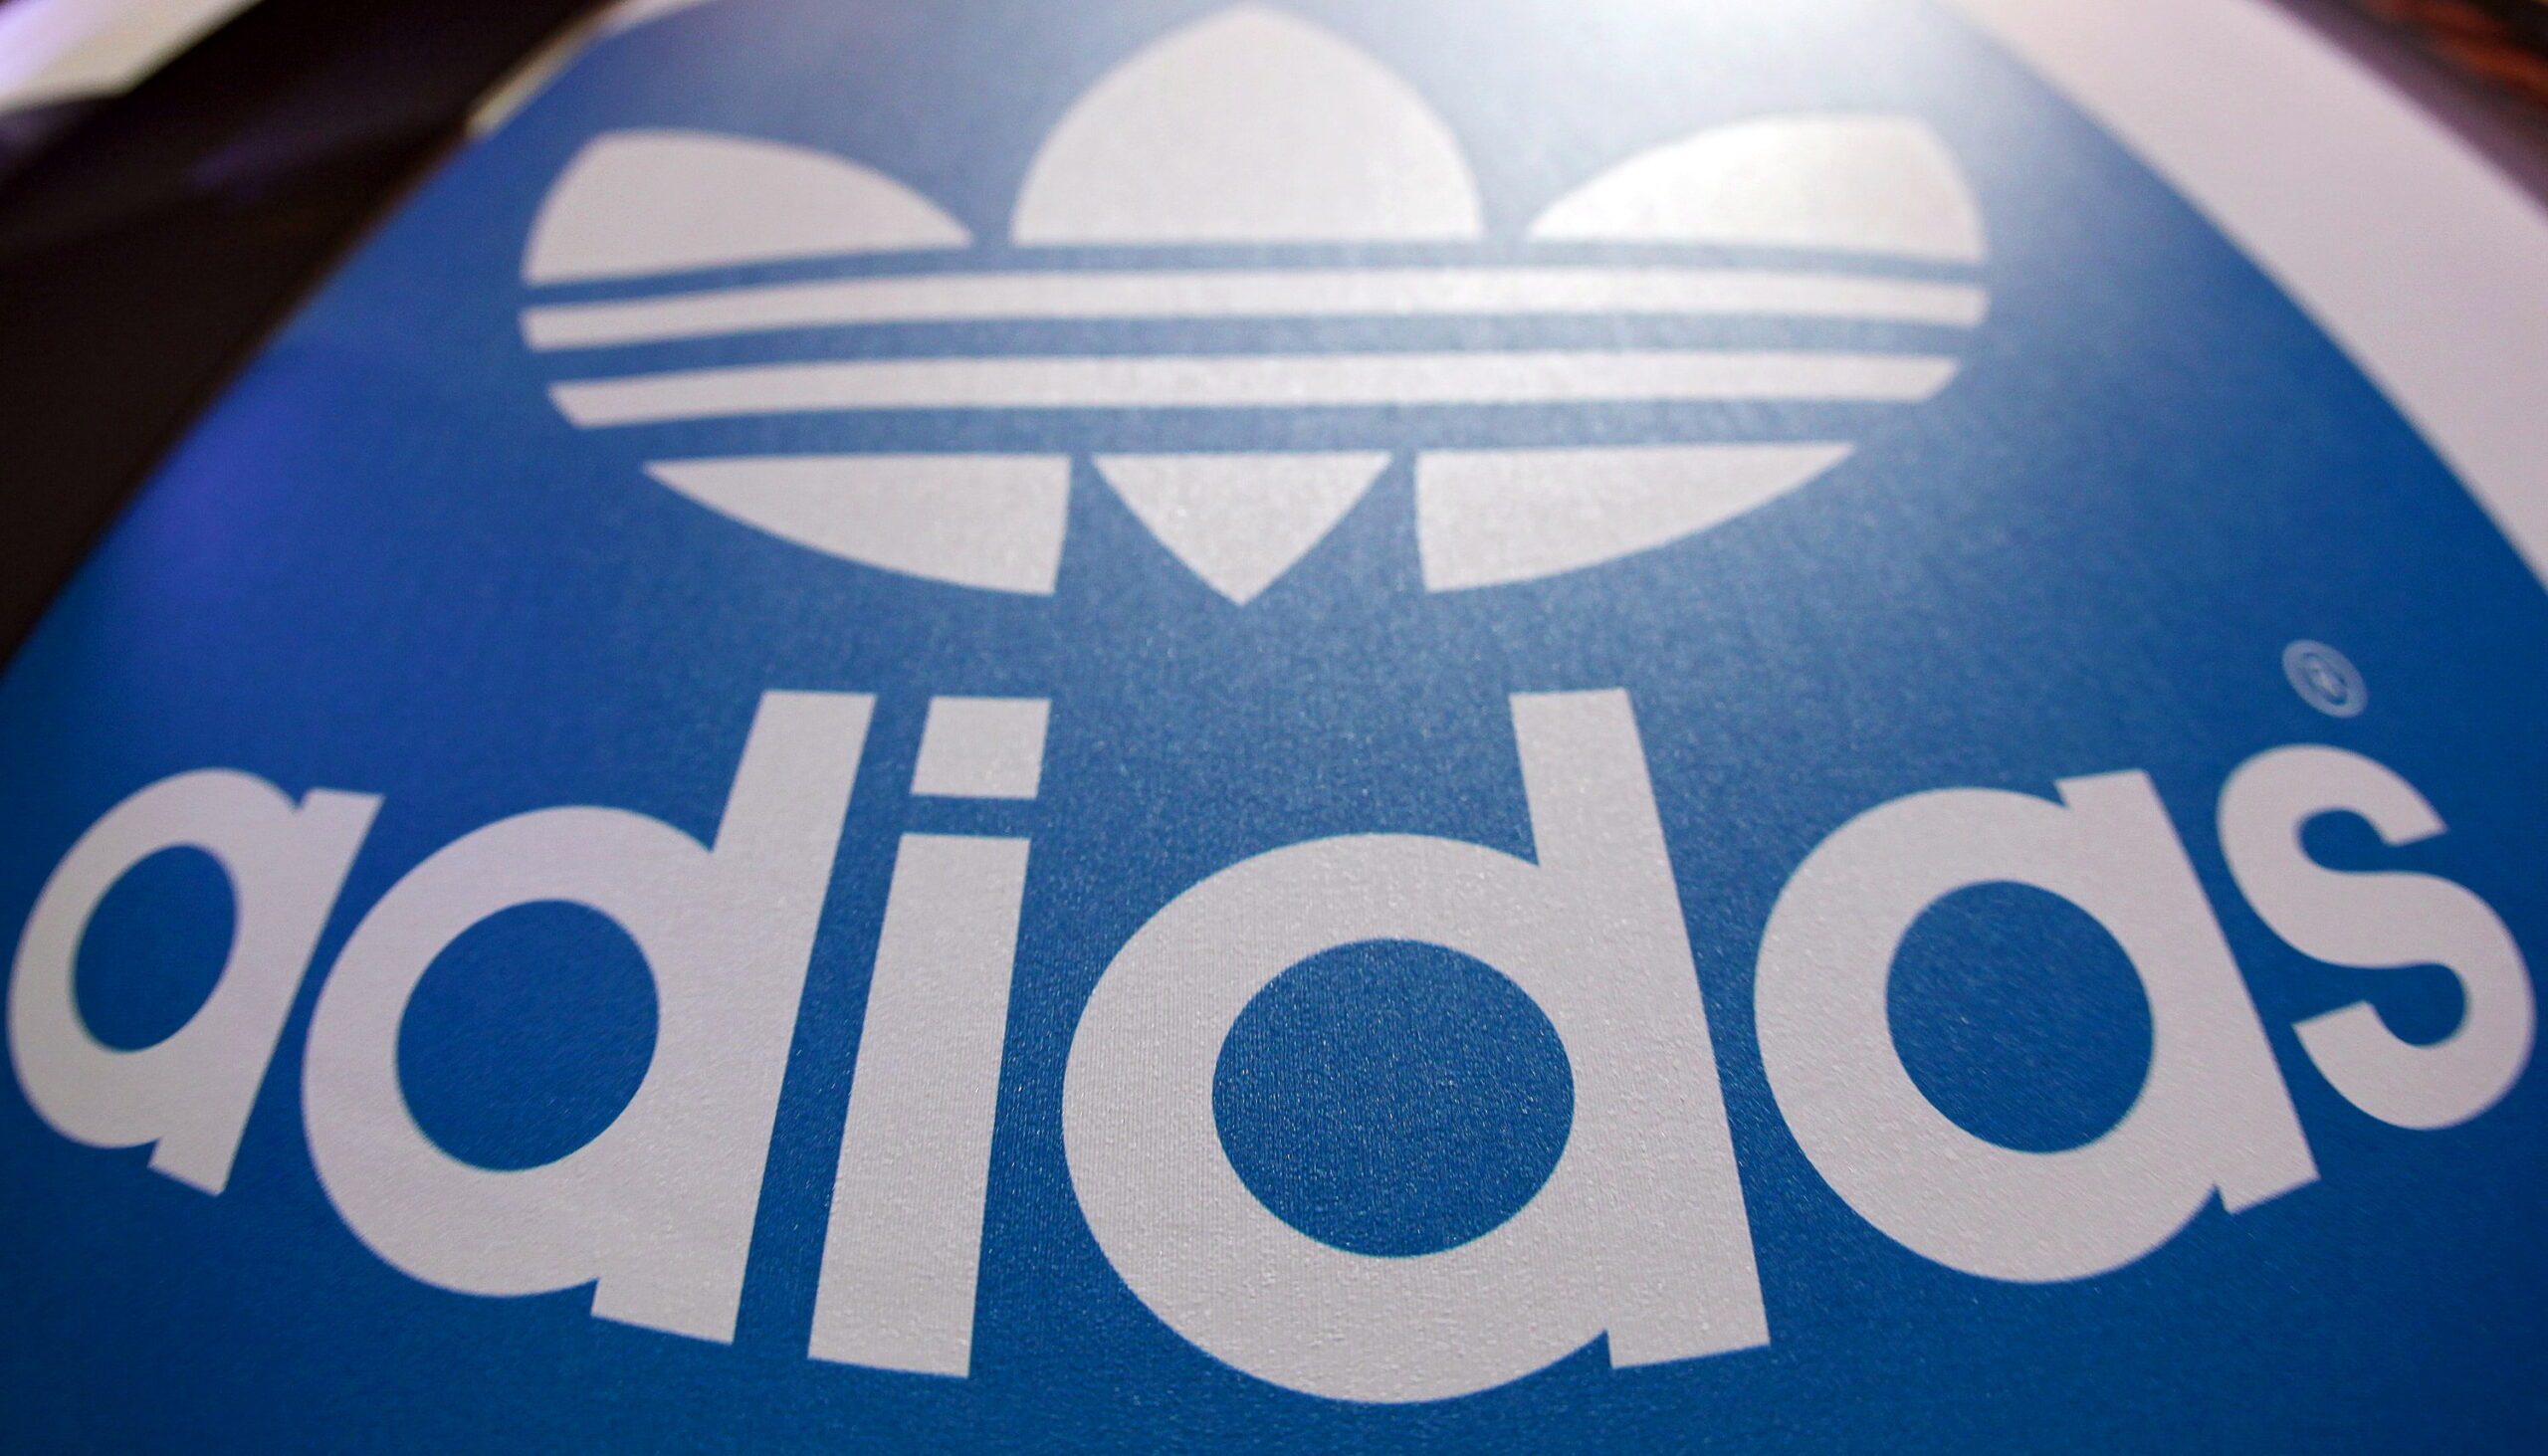 Adidas sees sales, profits rising 10-12% this year